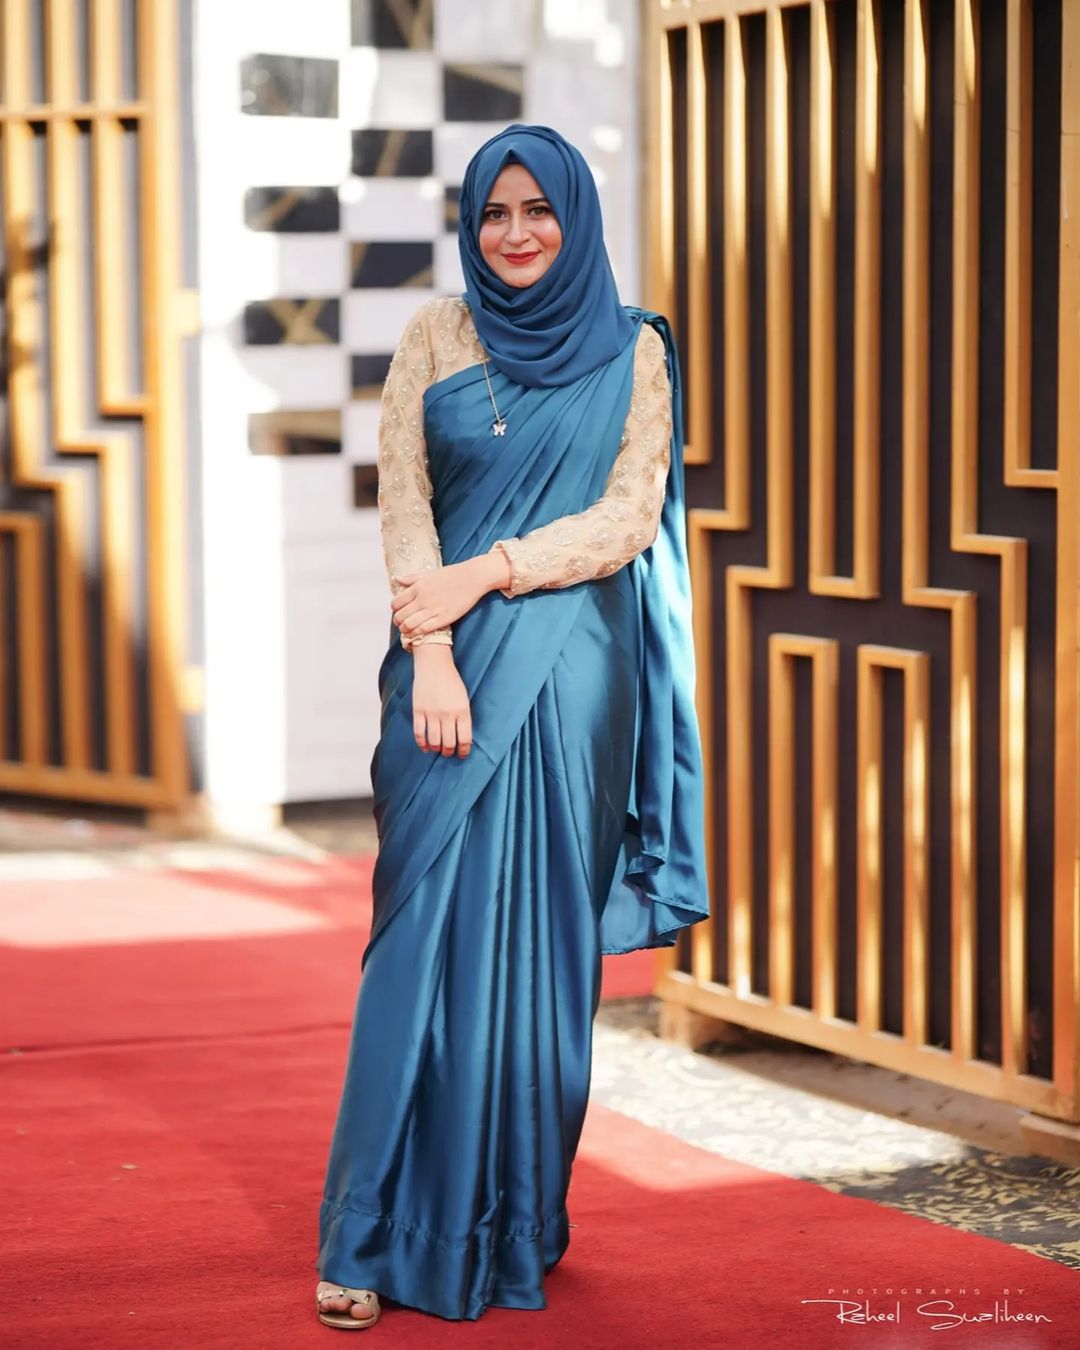 hijab with saree on Pinterest